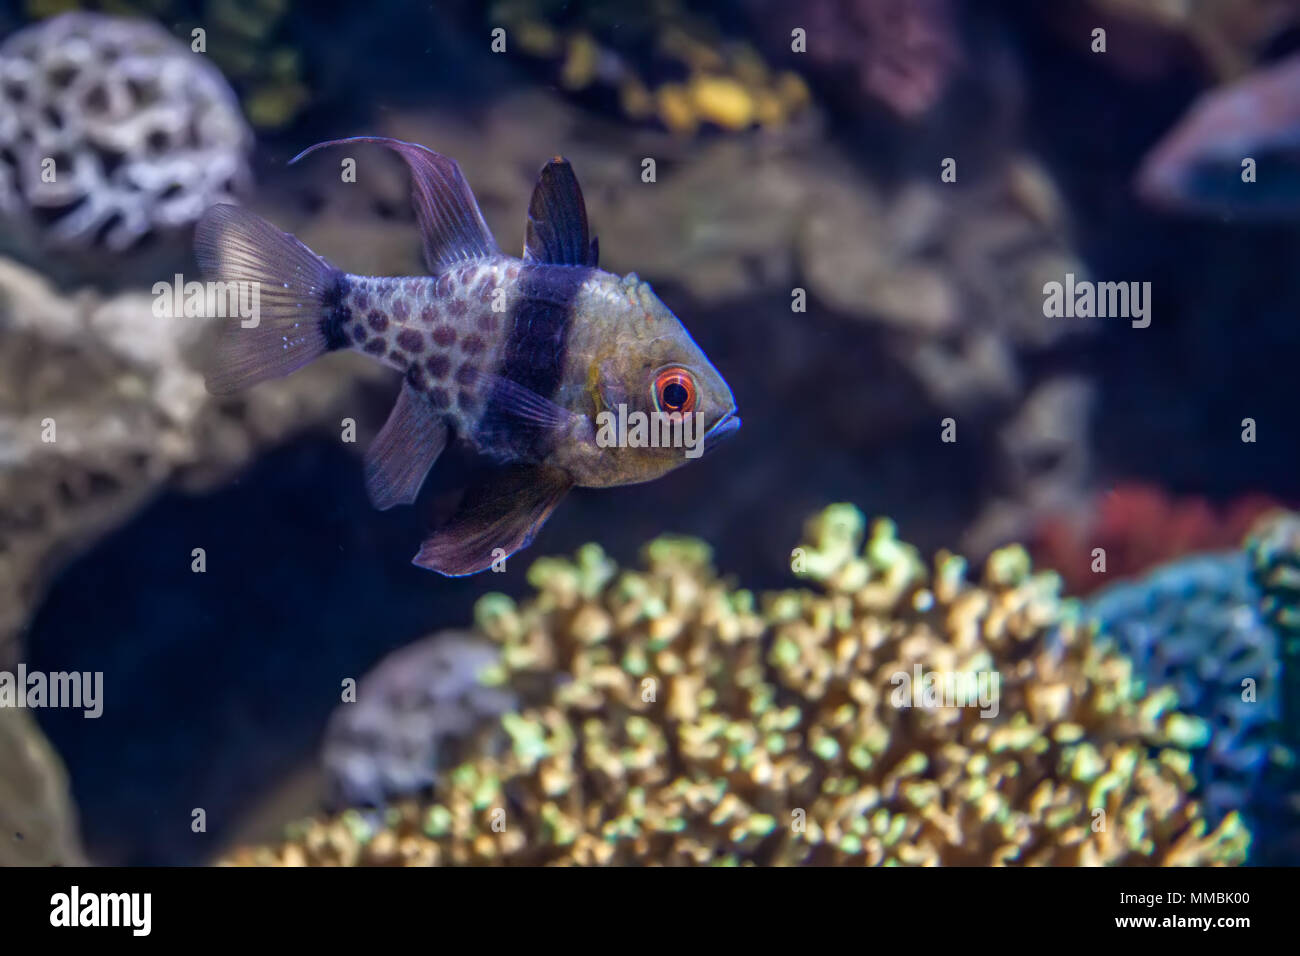 Banggai Cardinalfish swimming in aquarium with coral in the background Stock Photo